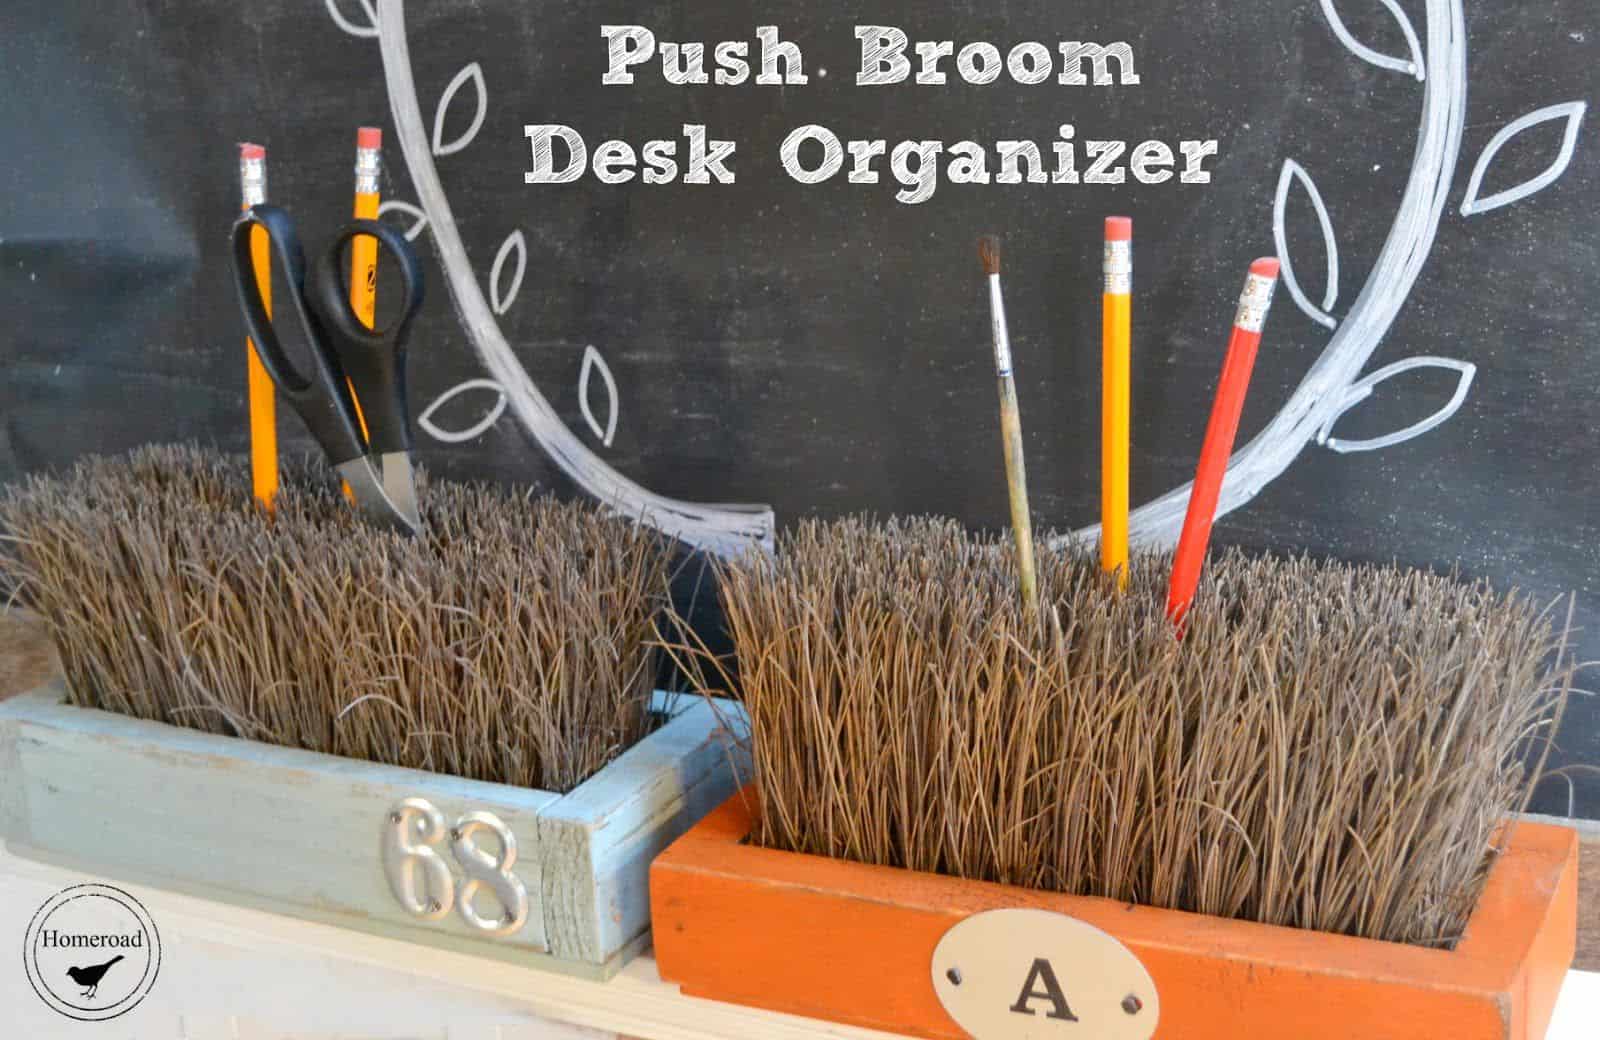 Push broom desk organizer